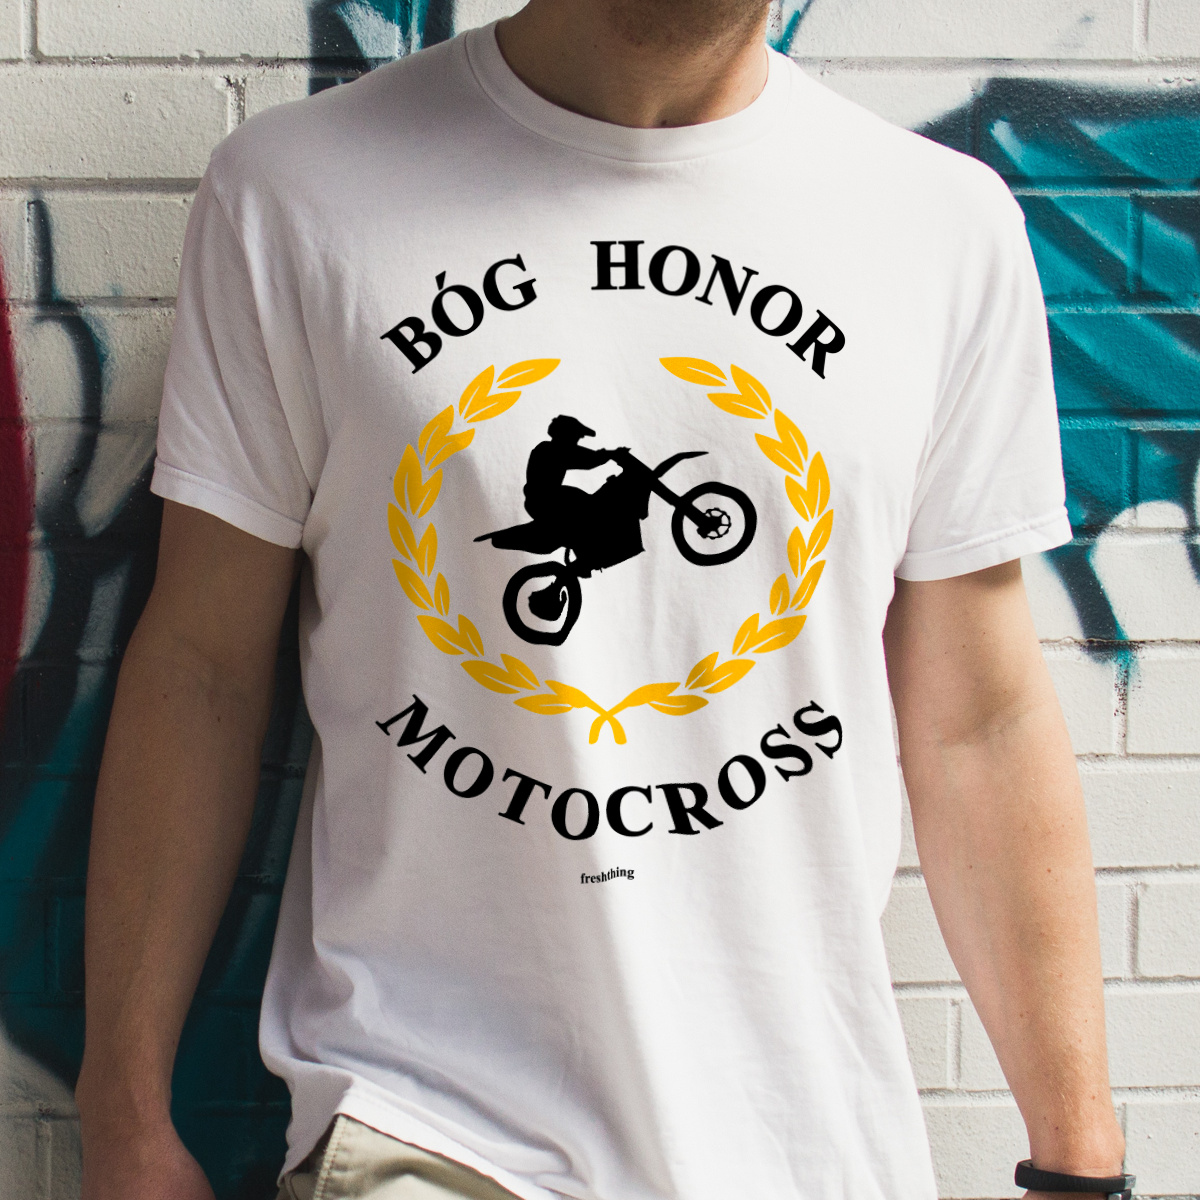 Bóg Honor Motocross - Męska Koszulka Biała